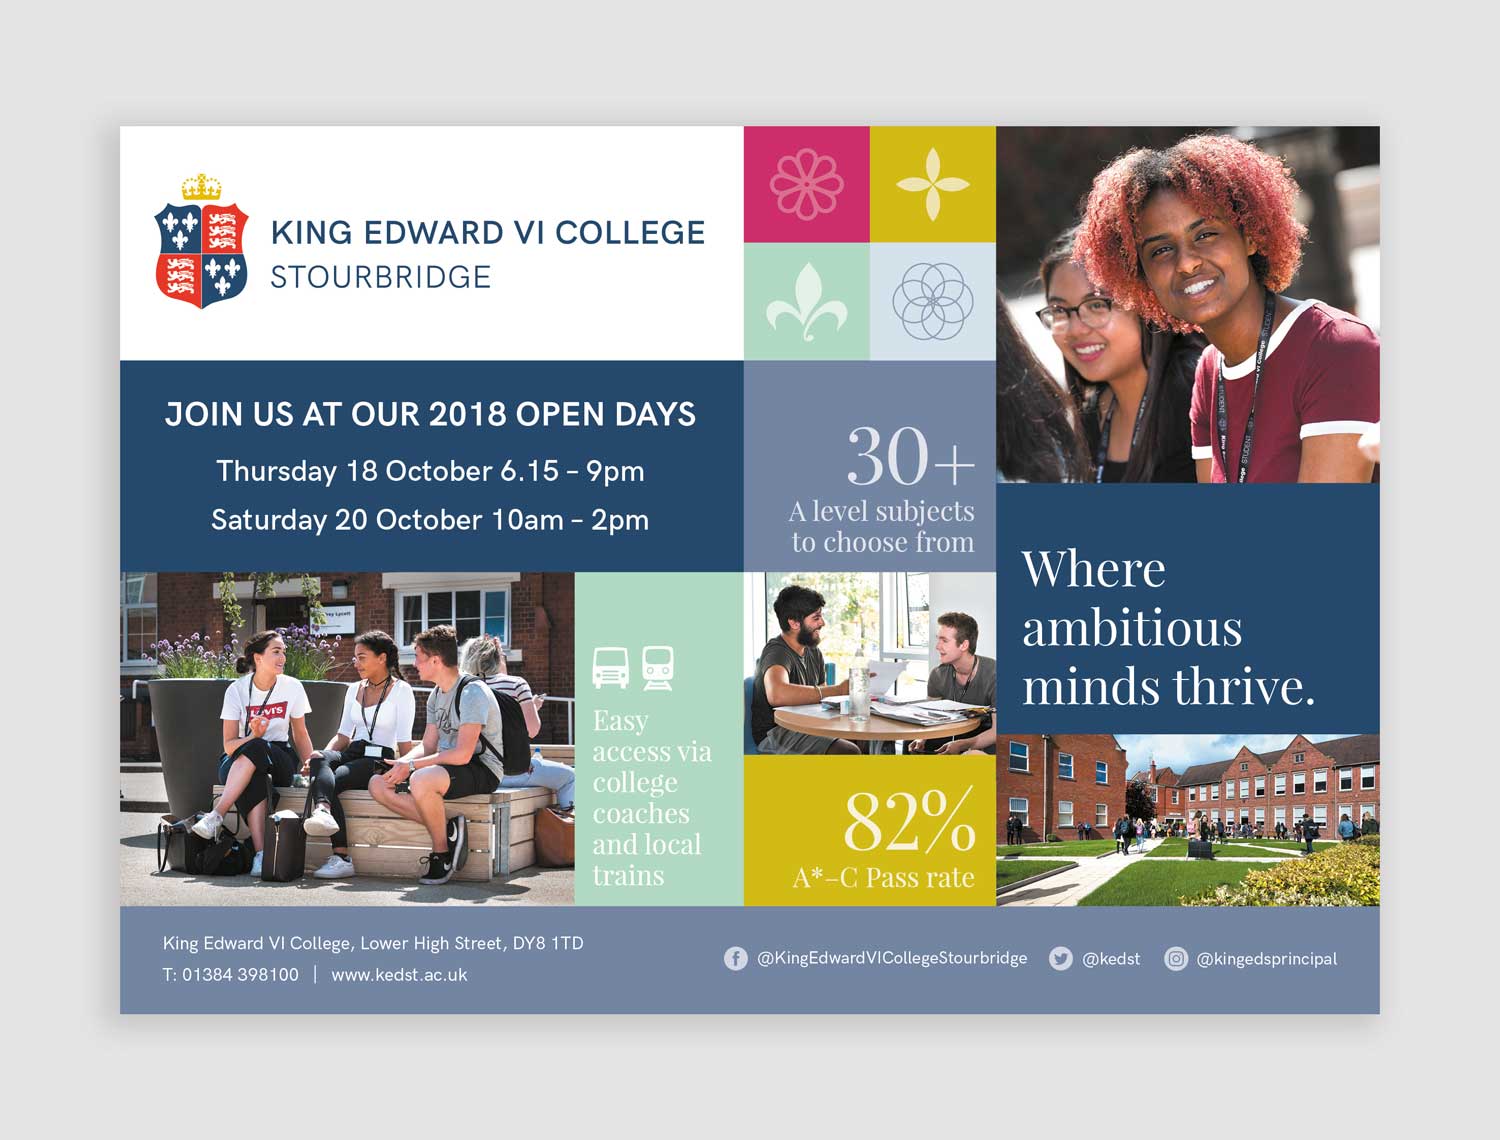 King Edward VI College Stourbridge rebrand